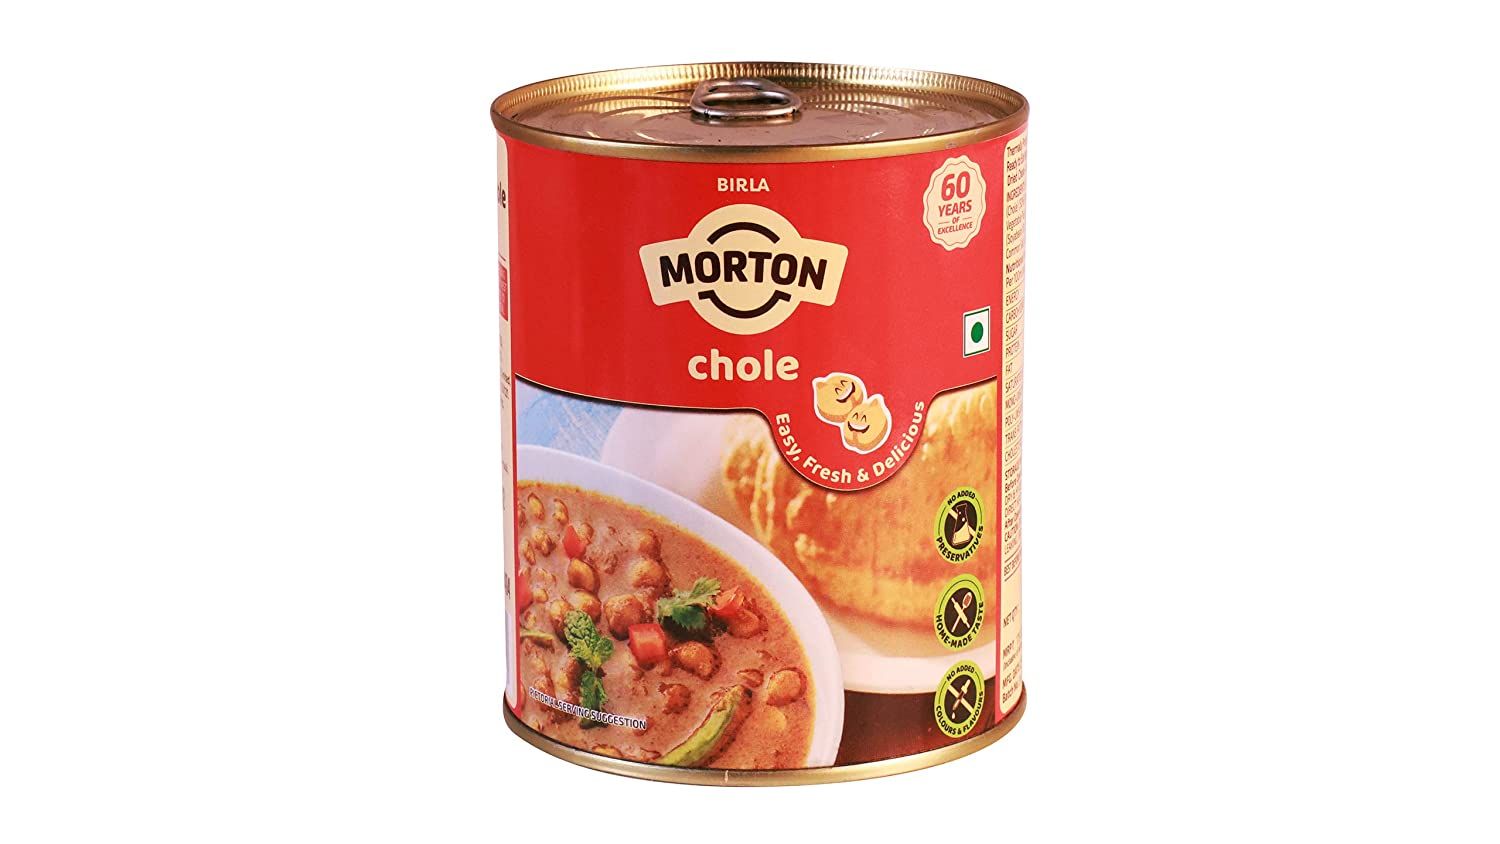 Morton Ready to Eat Chole Image